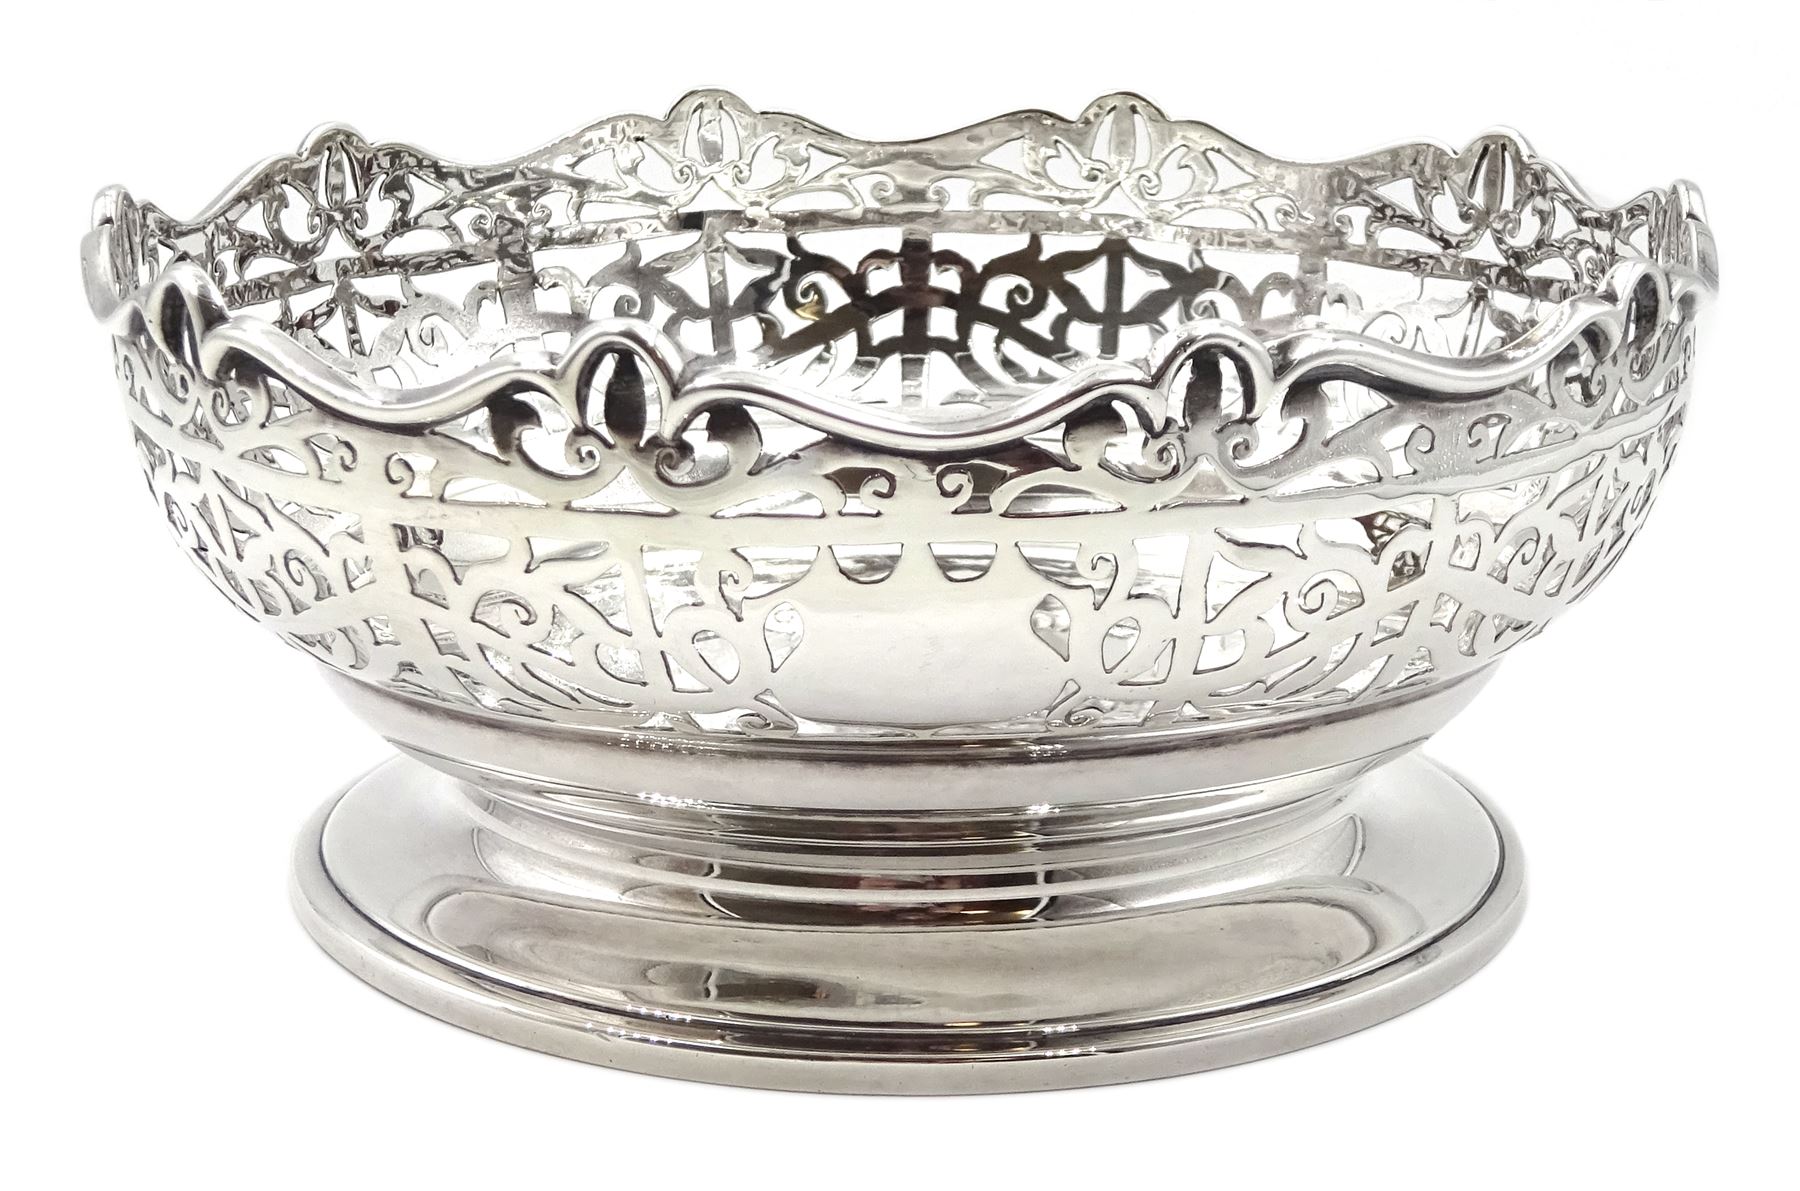 Edwardian silver raised bowl with pierced decoration by William Aitken